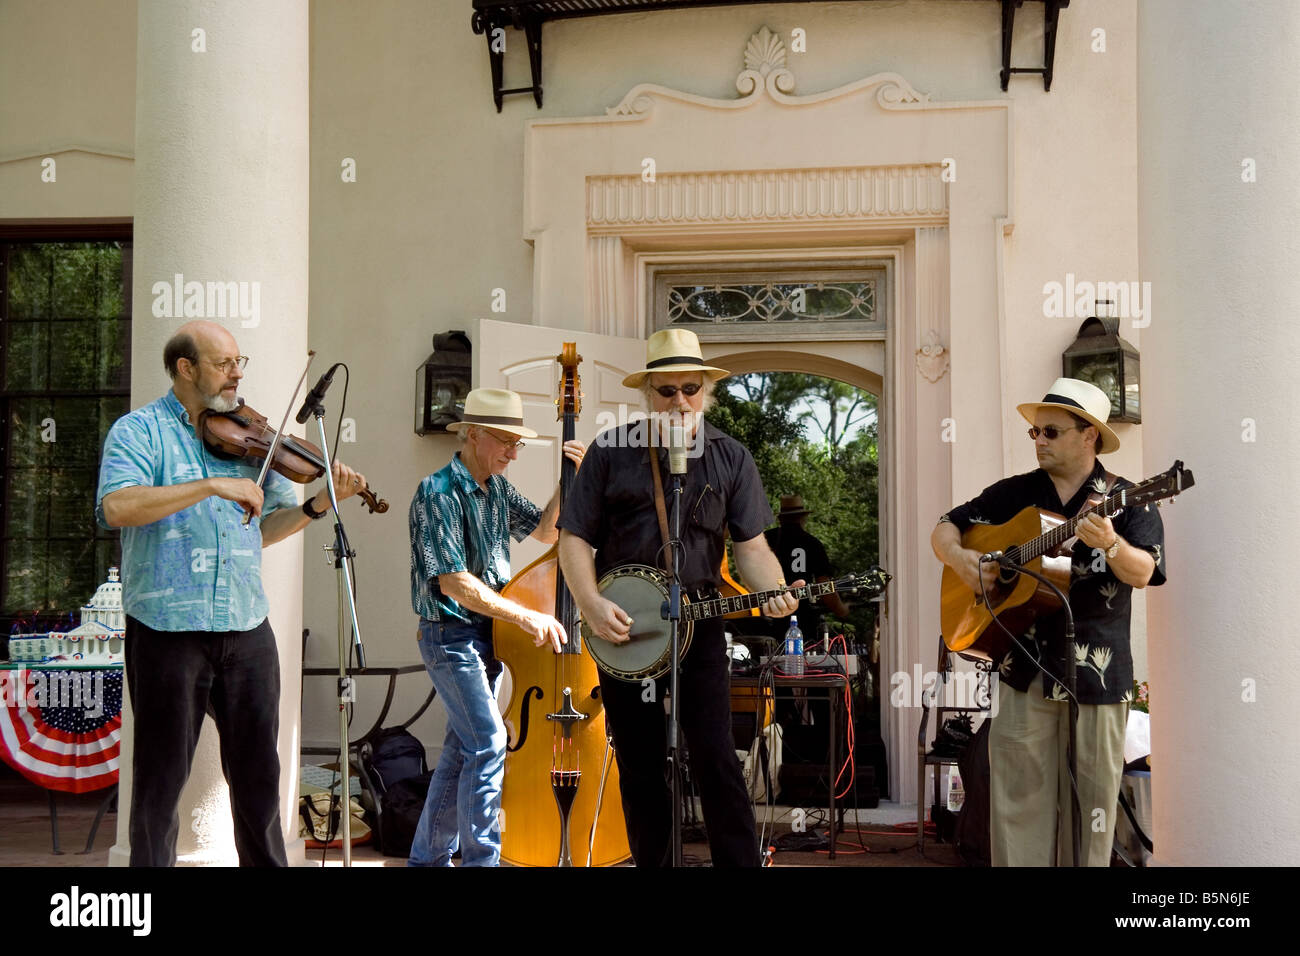 A four piece folk band called The Lonestar Bluegrass Band. Stock Photo